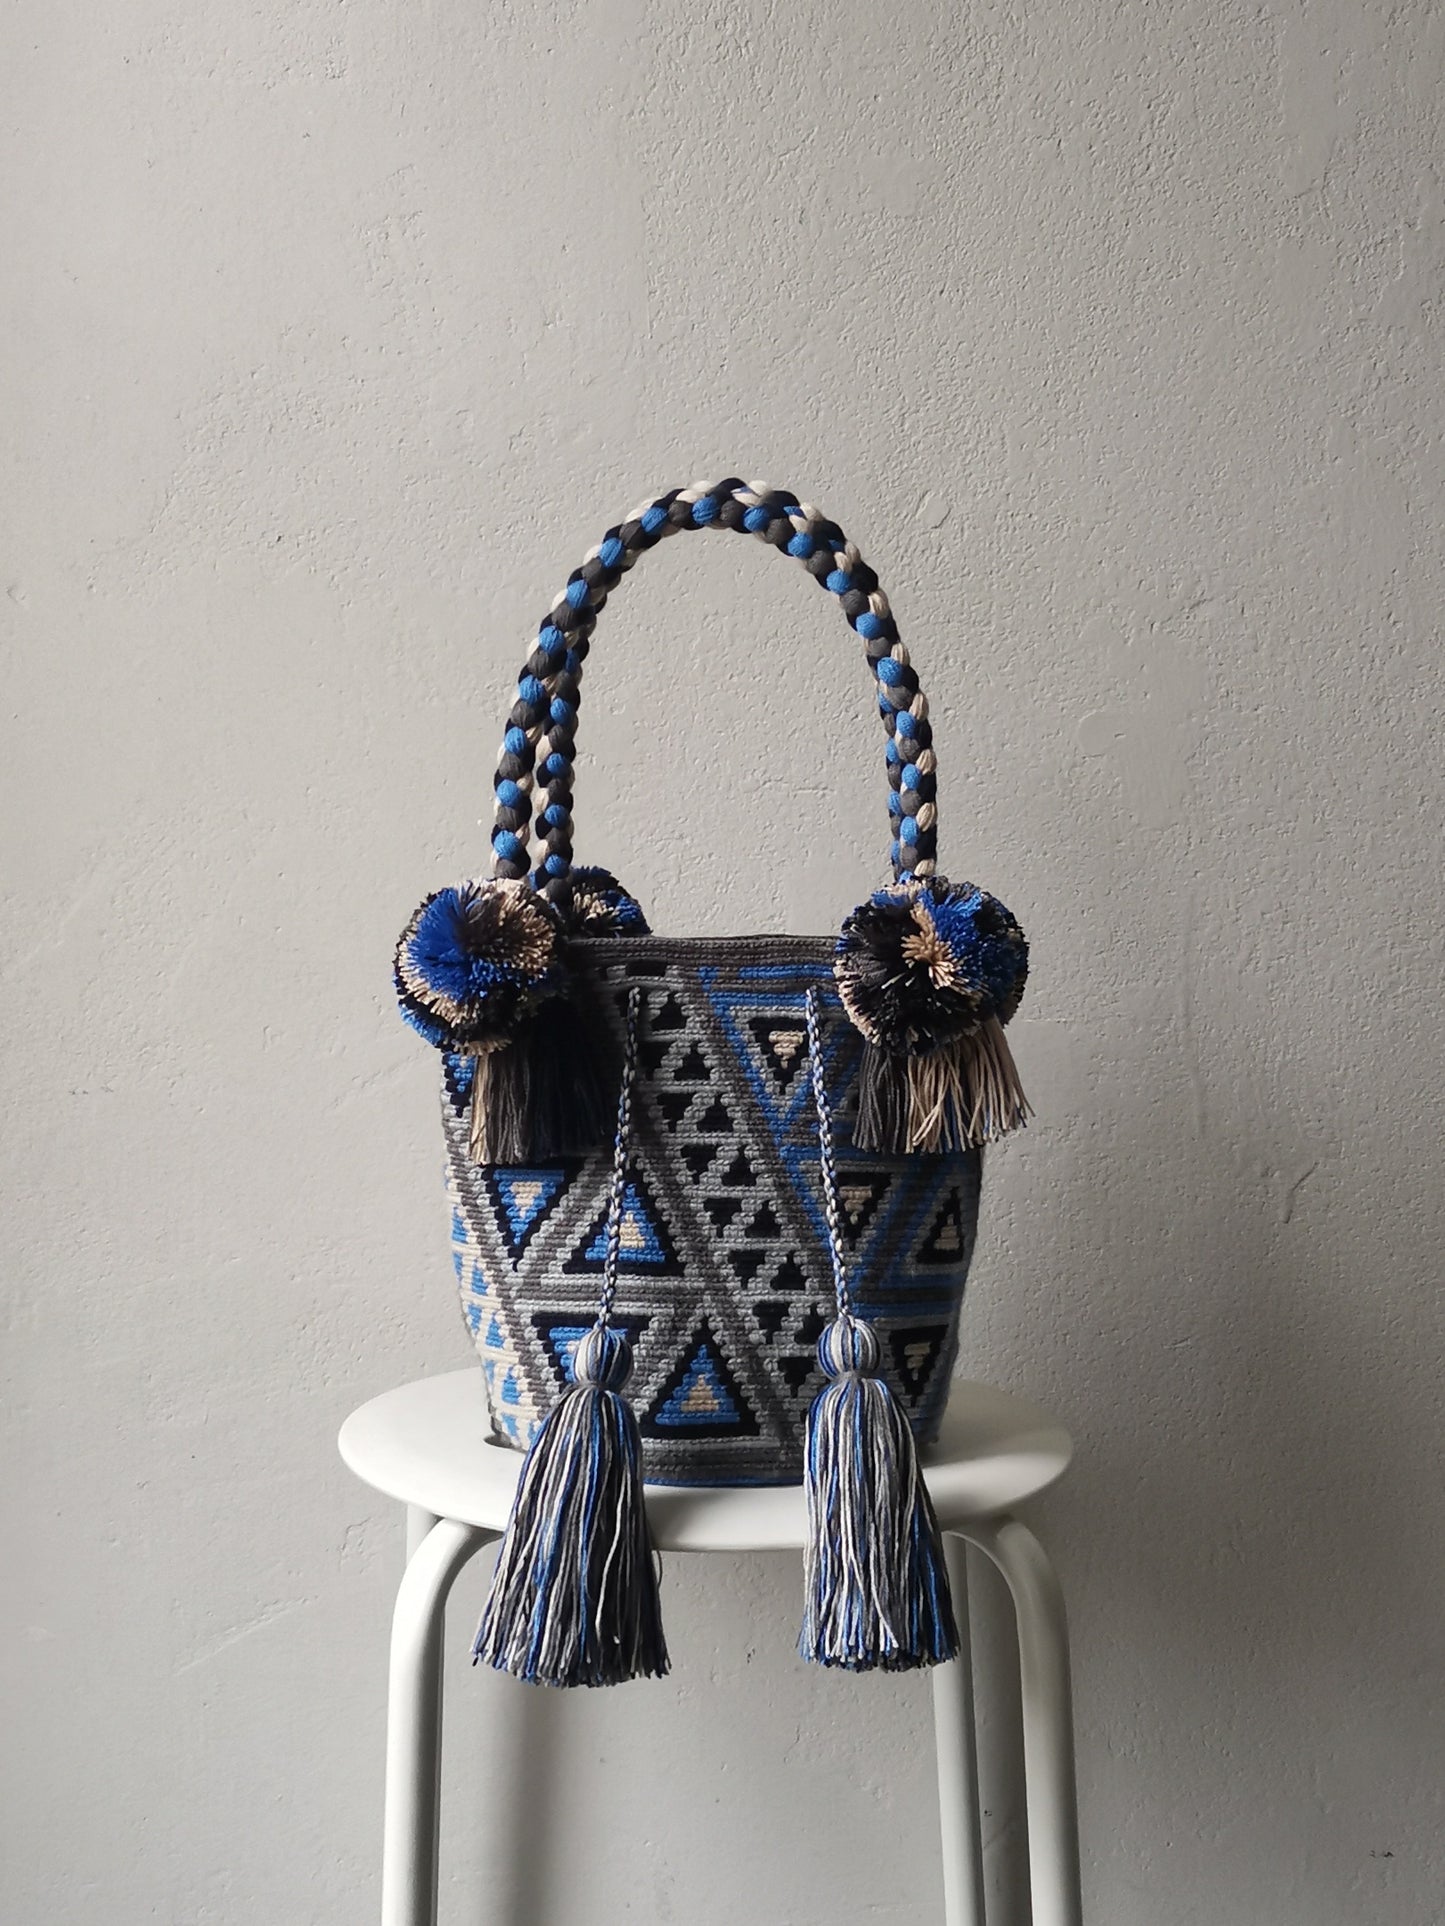 Gray and blue M mochila handbag